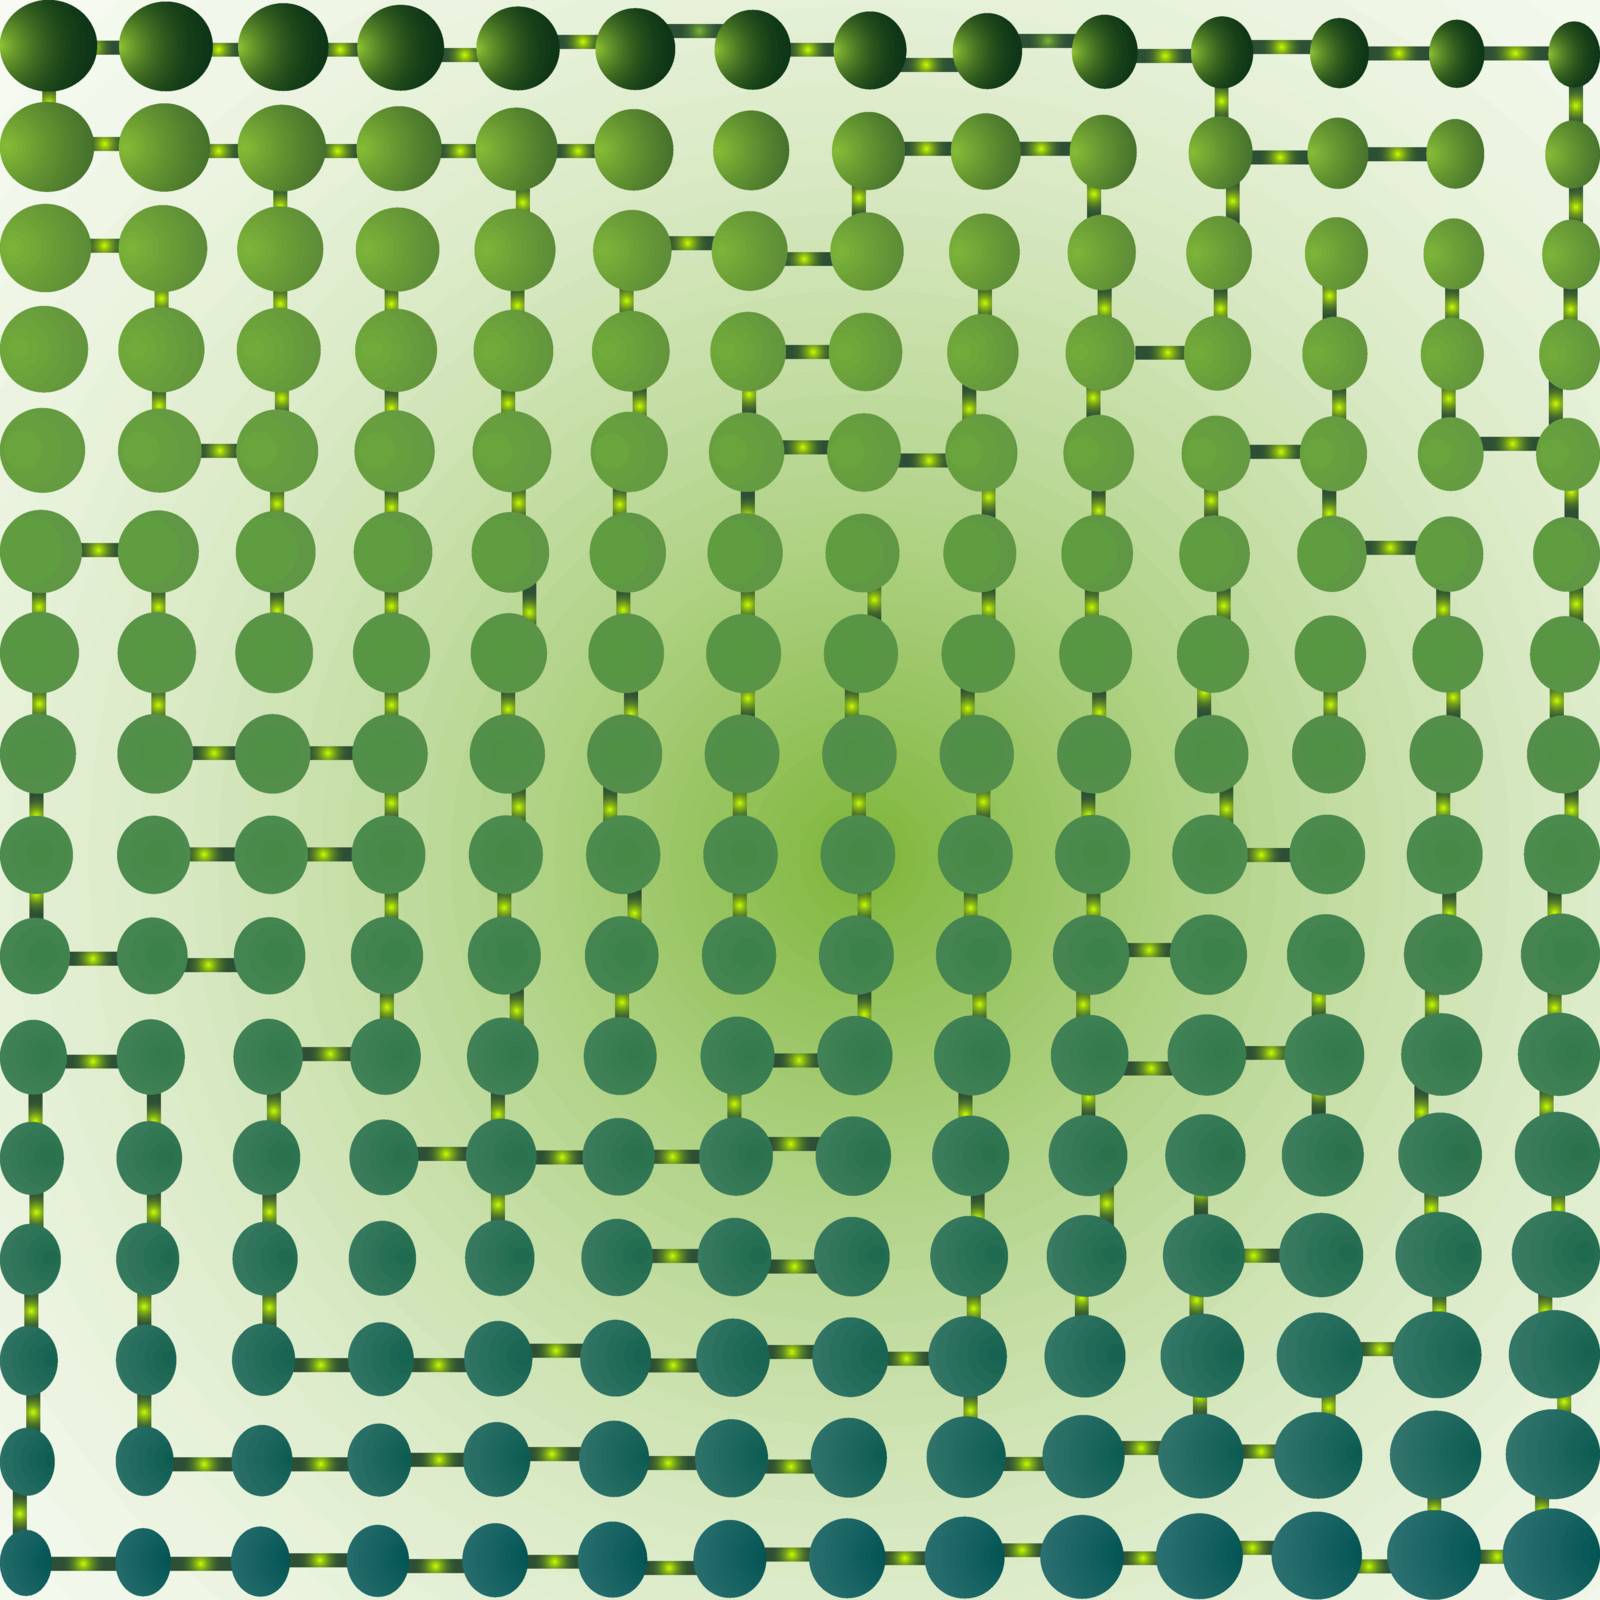 half tone green maze; abstract art illustration